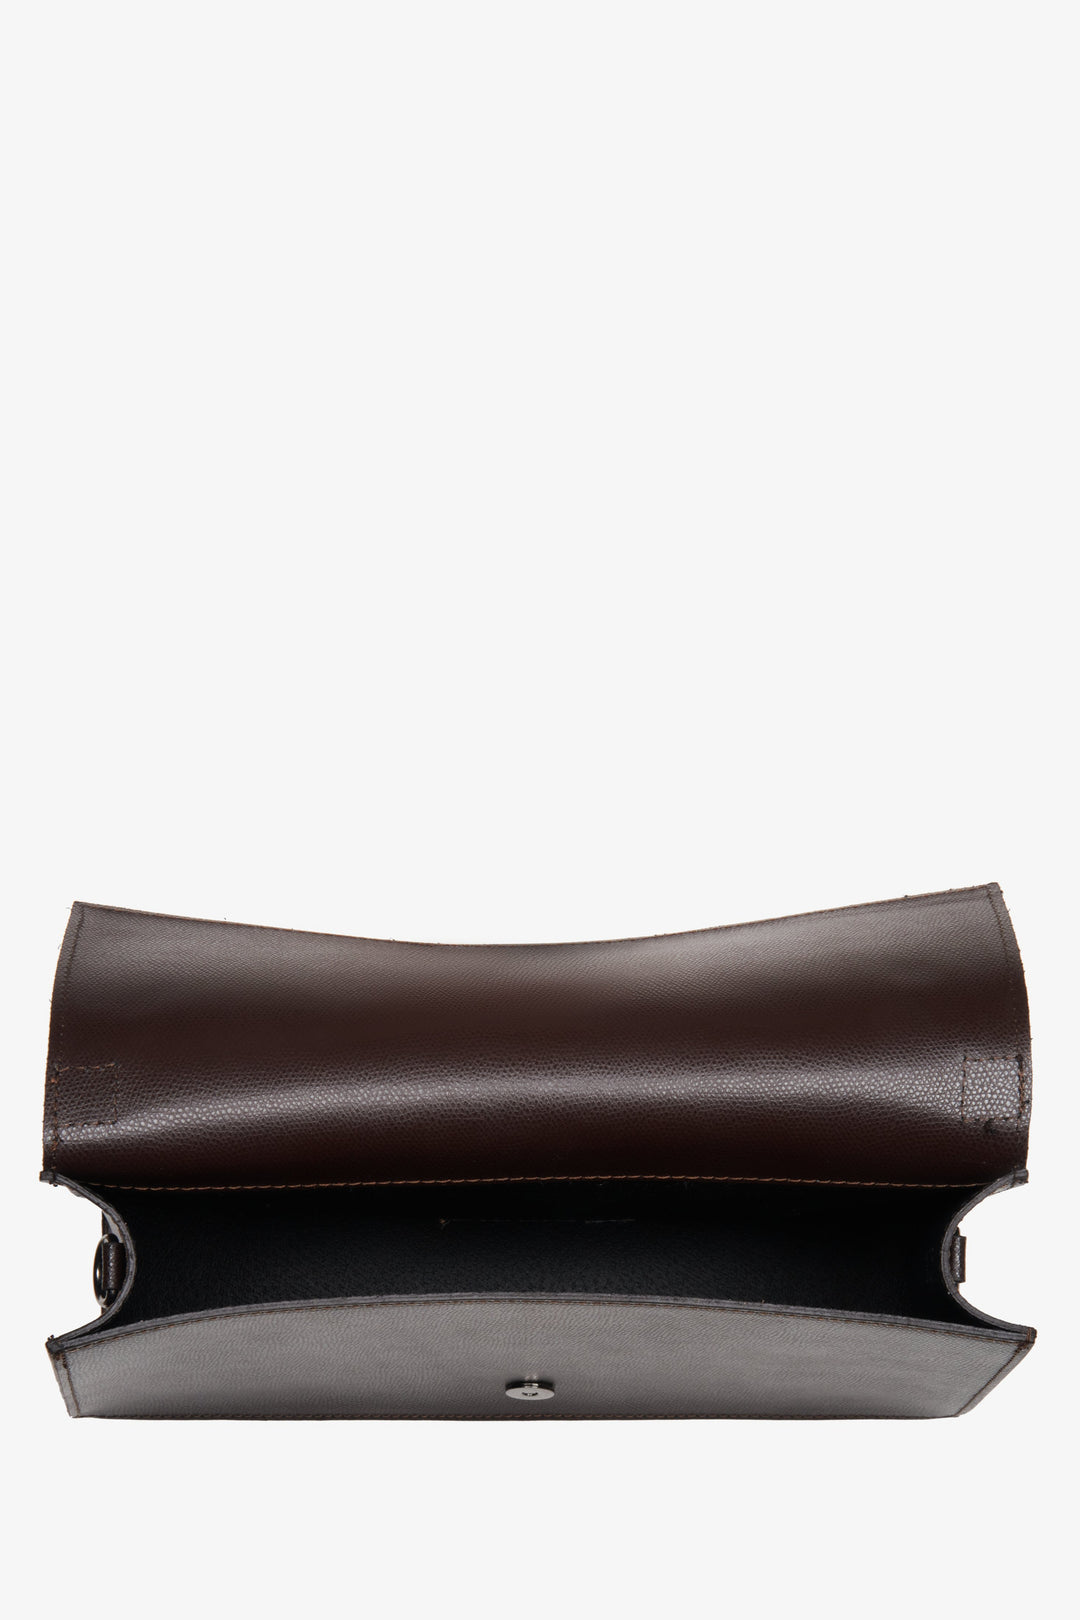 Women's small dark brown leather handbag by Estro - interior of the model.